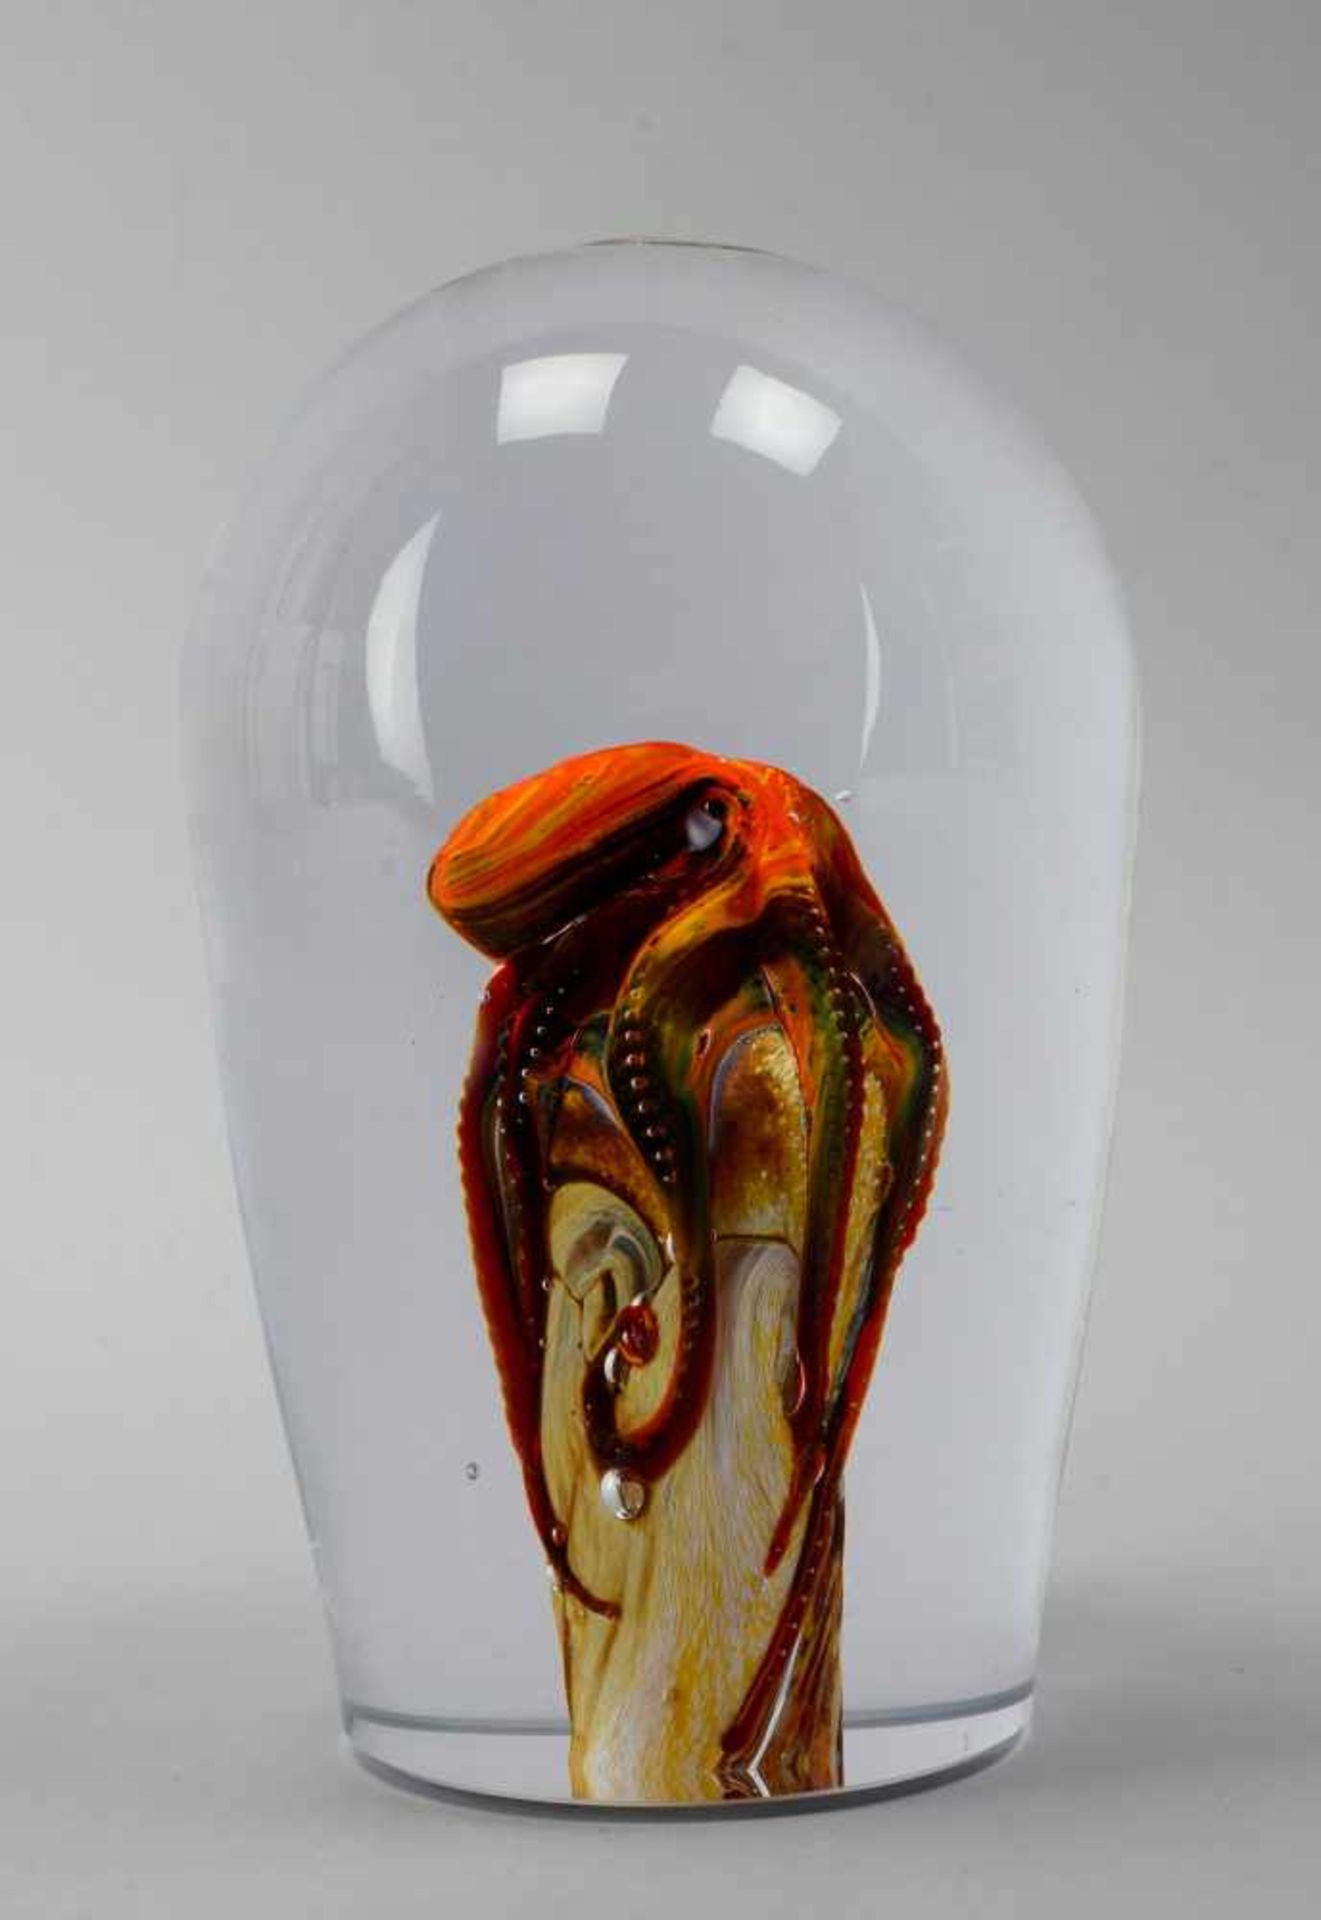 Glasskulptur/Glasobjekt "Tintenfisch/Octopus/Polpo", signiert, Höhe: ca. 21 cm, Ø: ca. 13 cm